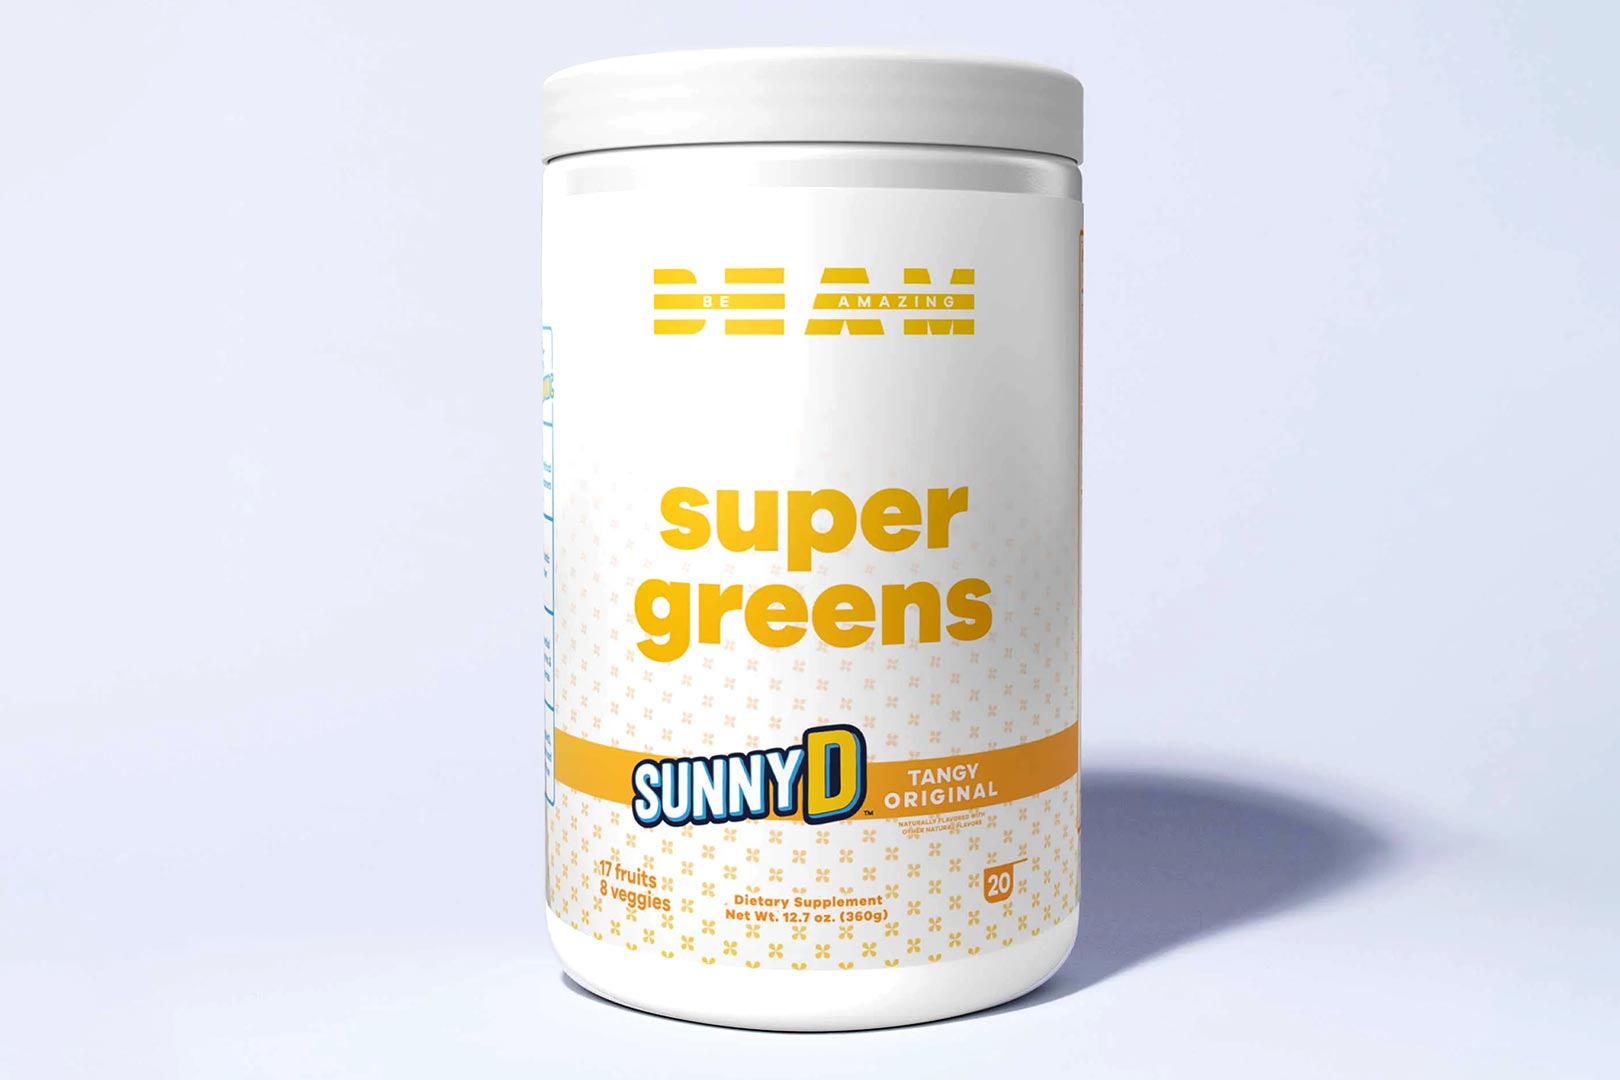 Beam Sunnyd Tangy Original Super Greens